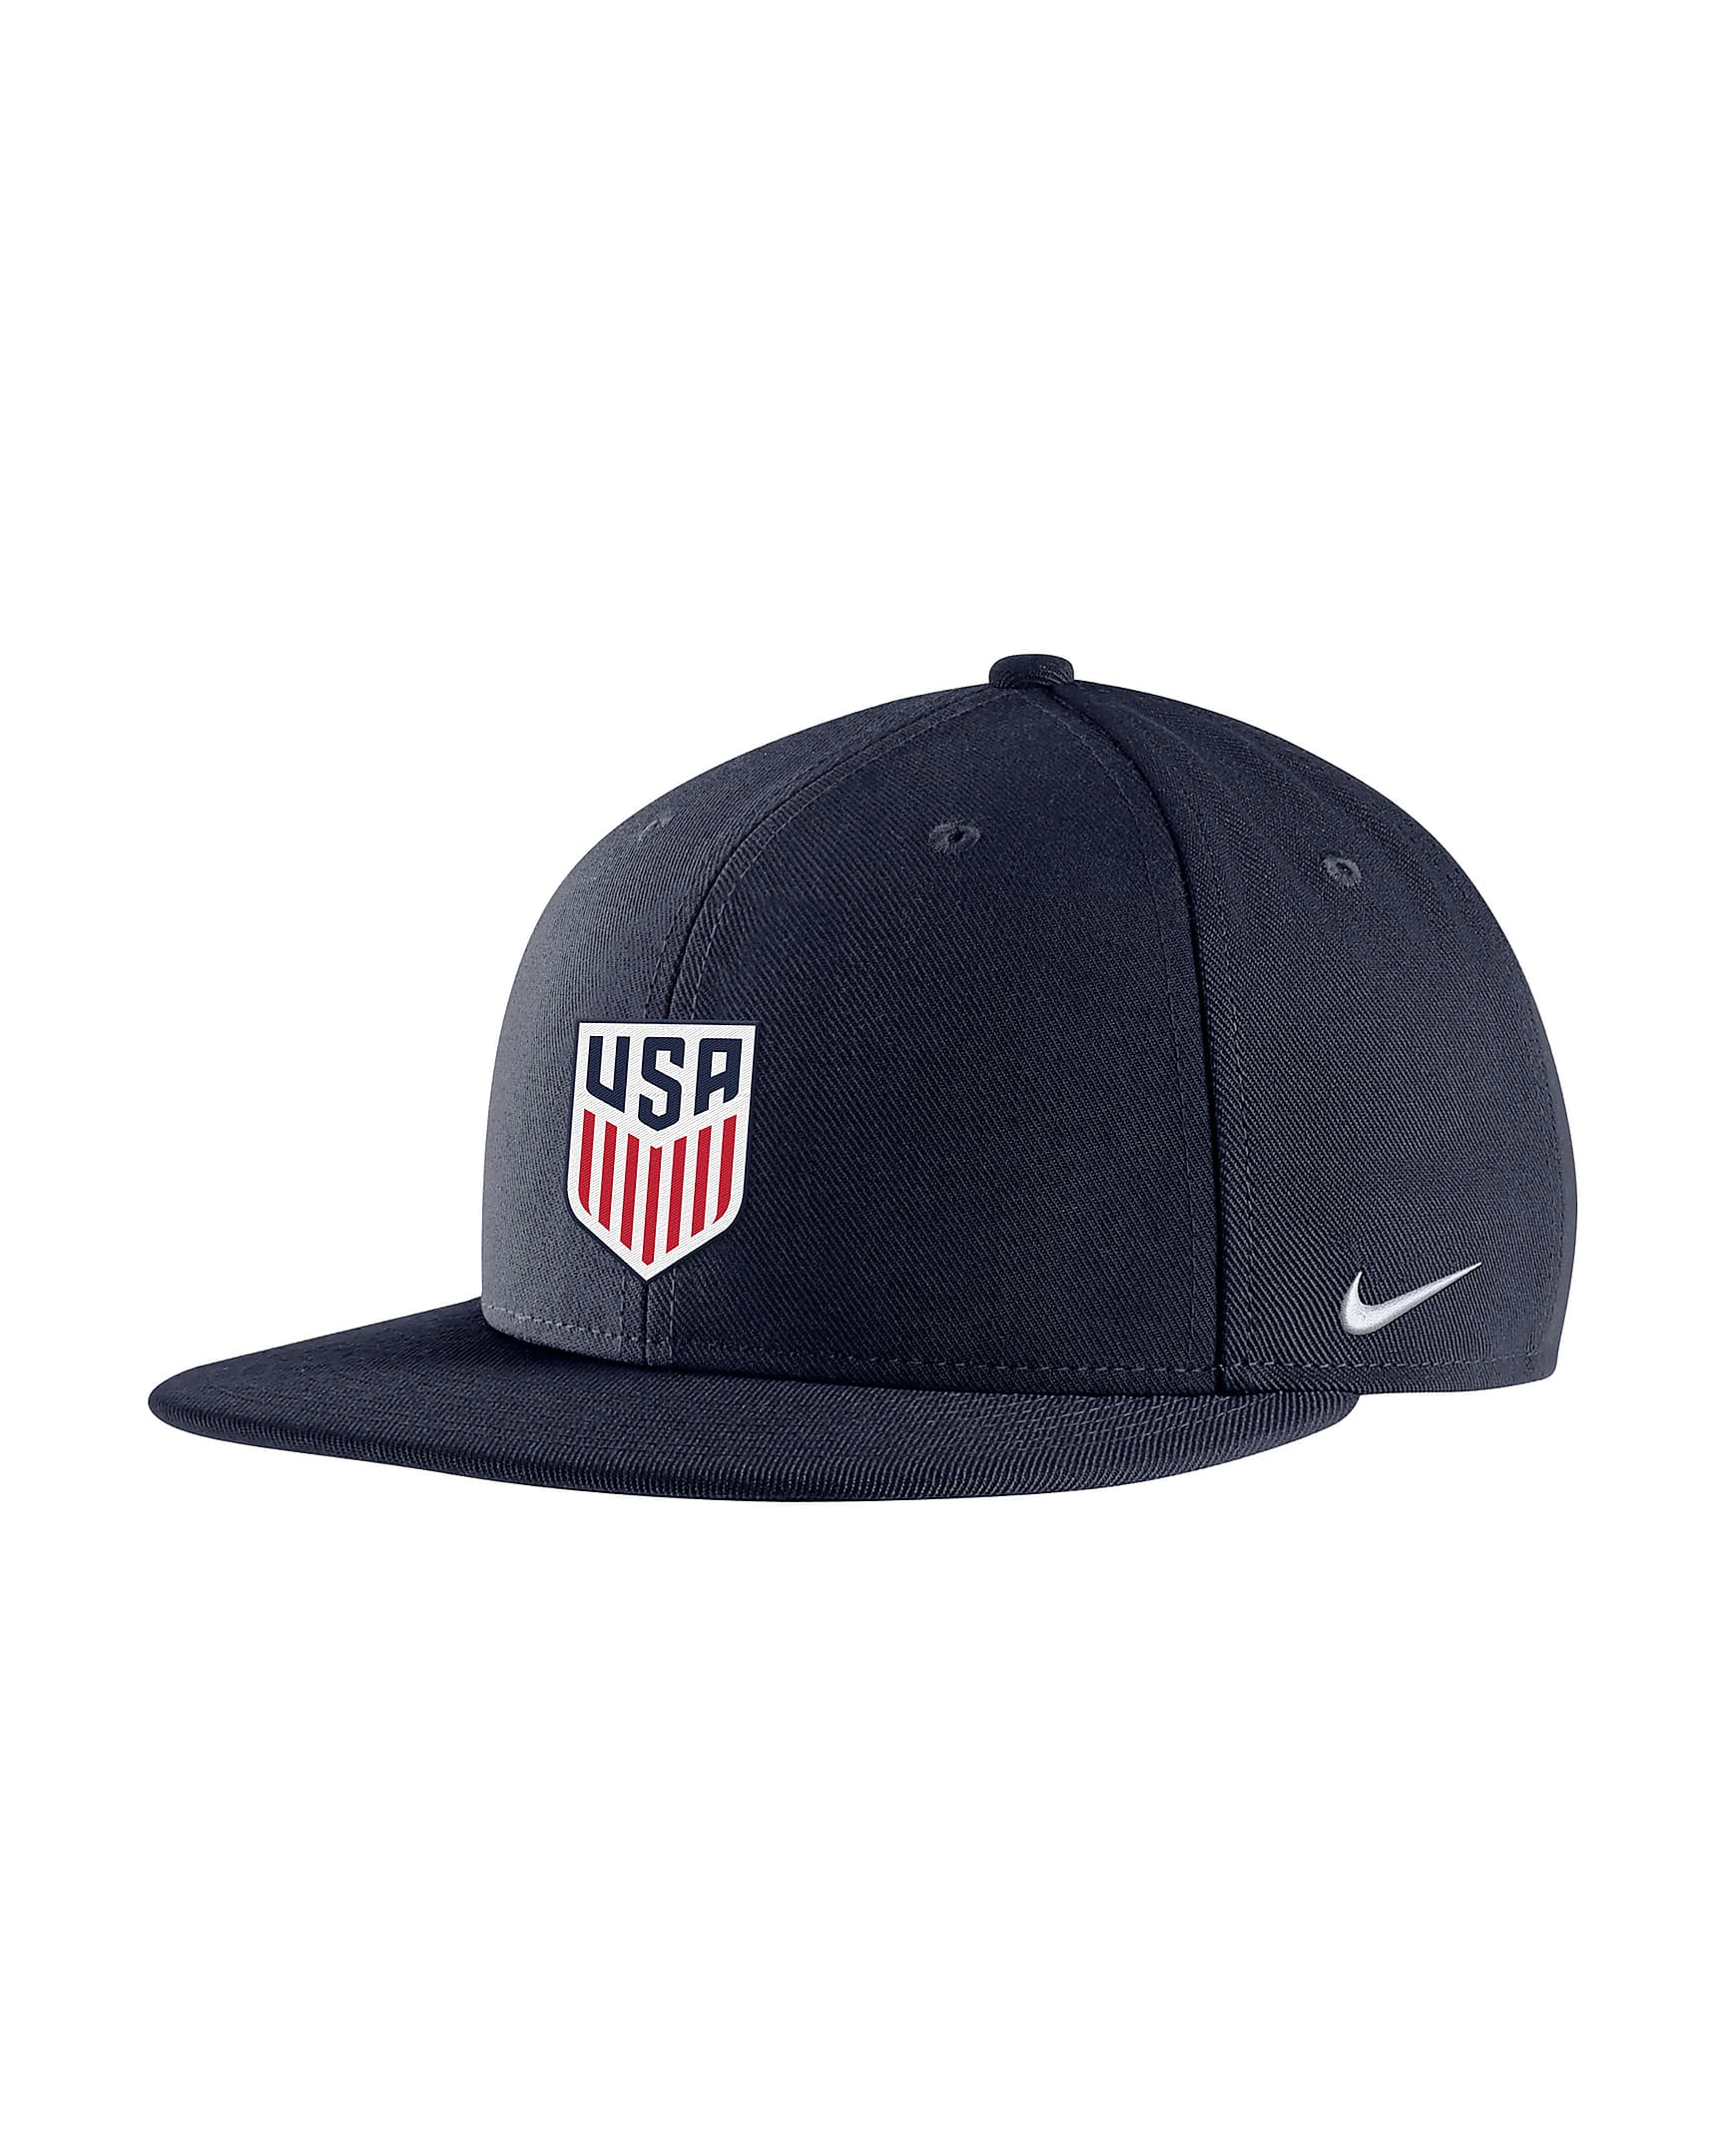 USMNT Pro Big Kids' Snapback Hat. Nike.com